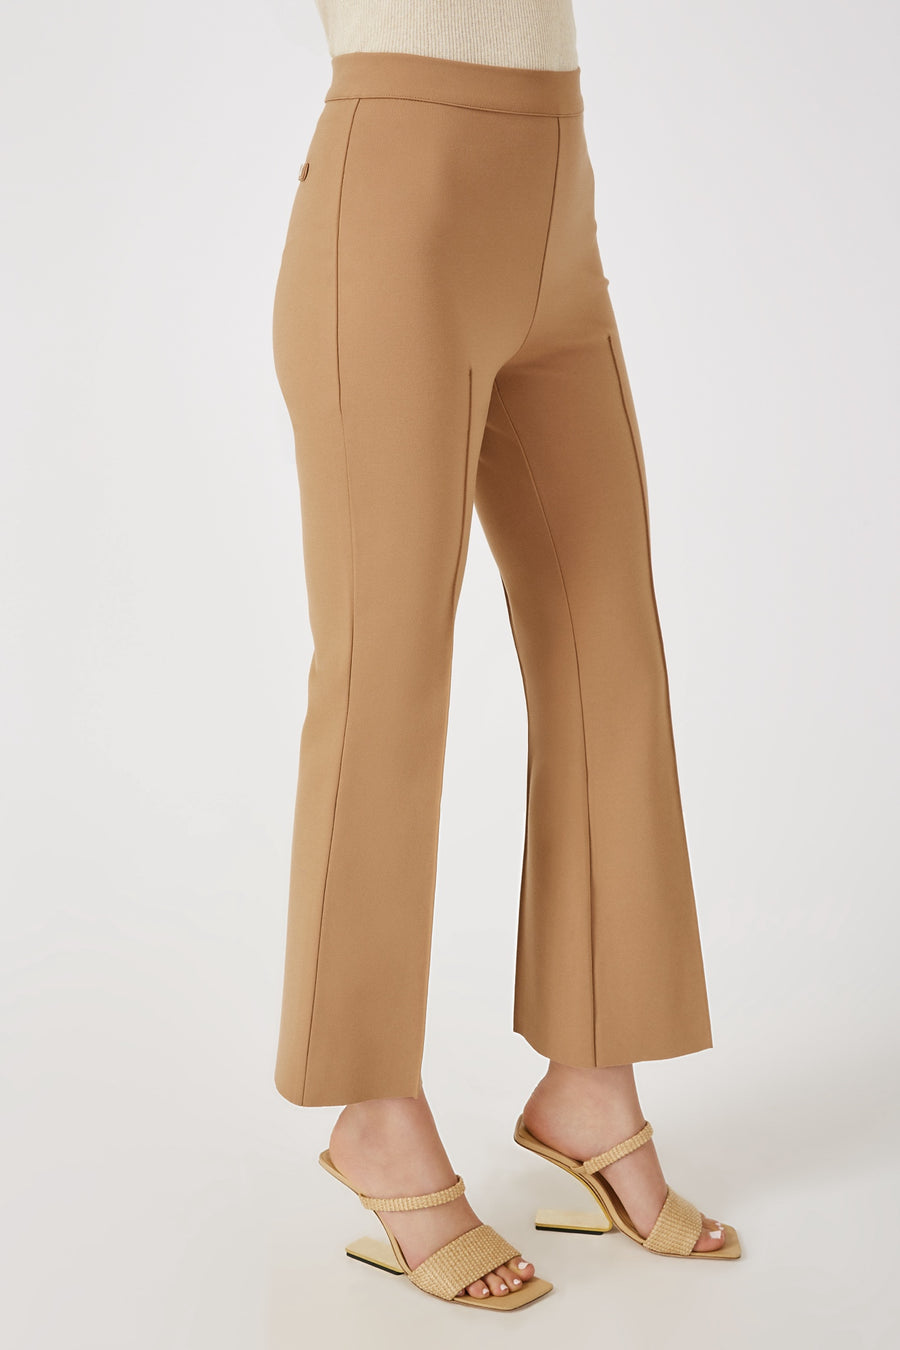 Greyven Porterfield Crop Pintuck Flare Pants - Desert Tan